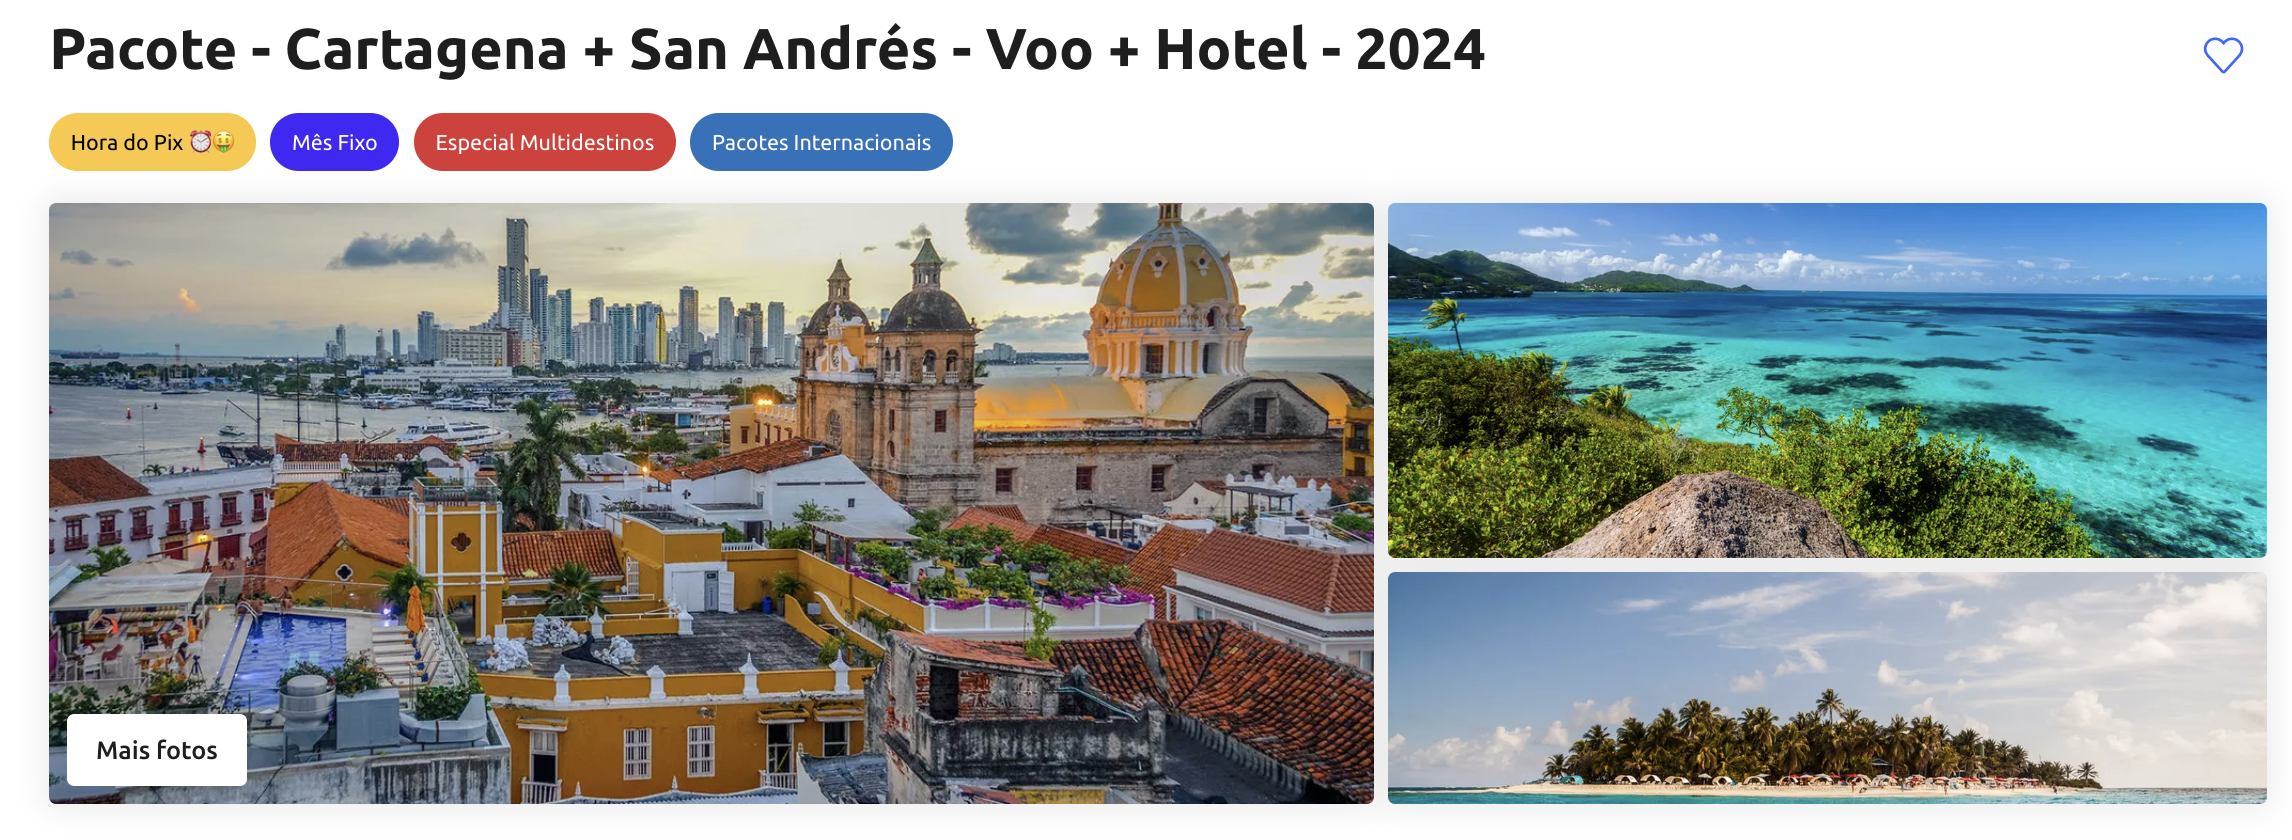 Pacote - Cartagena + San Andrés - Voo + Hotel - 2024